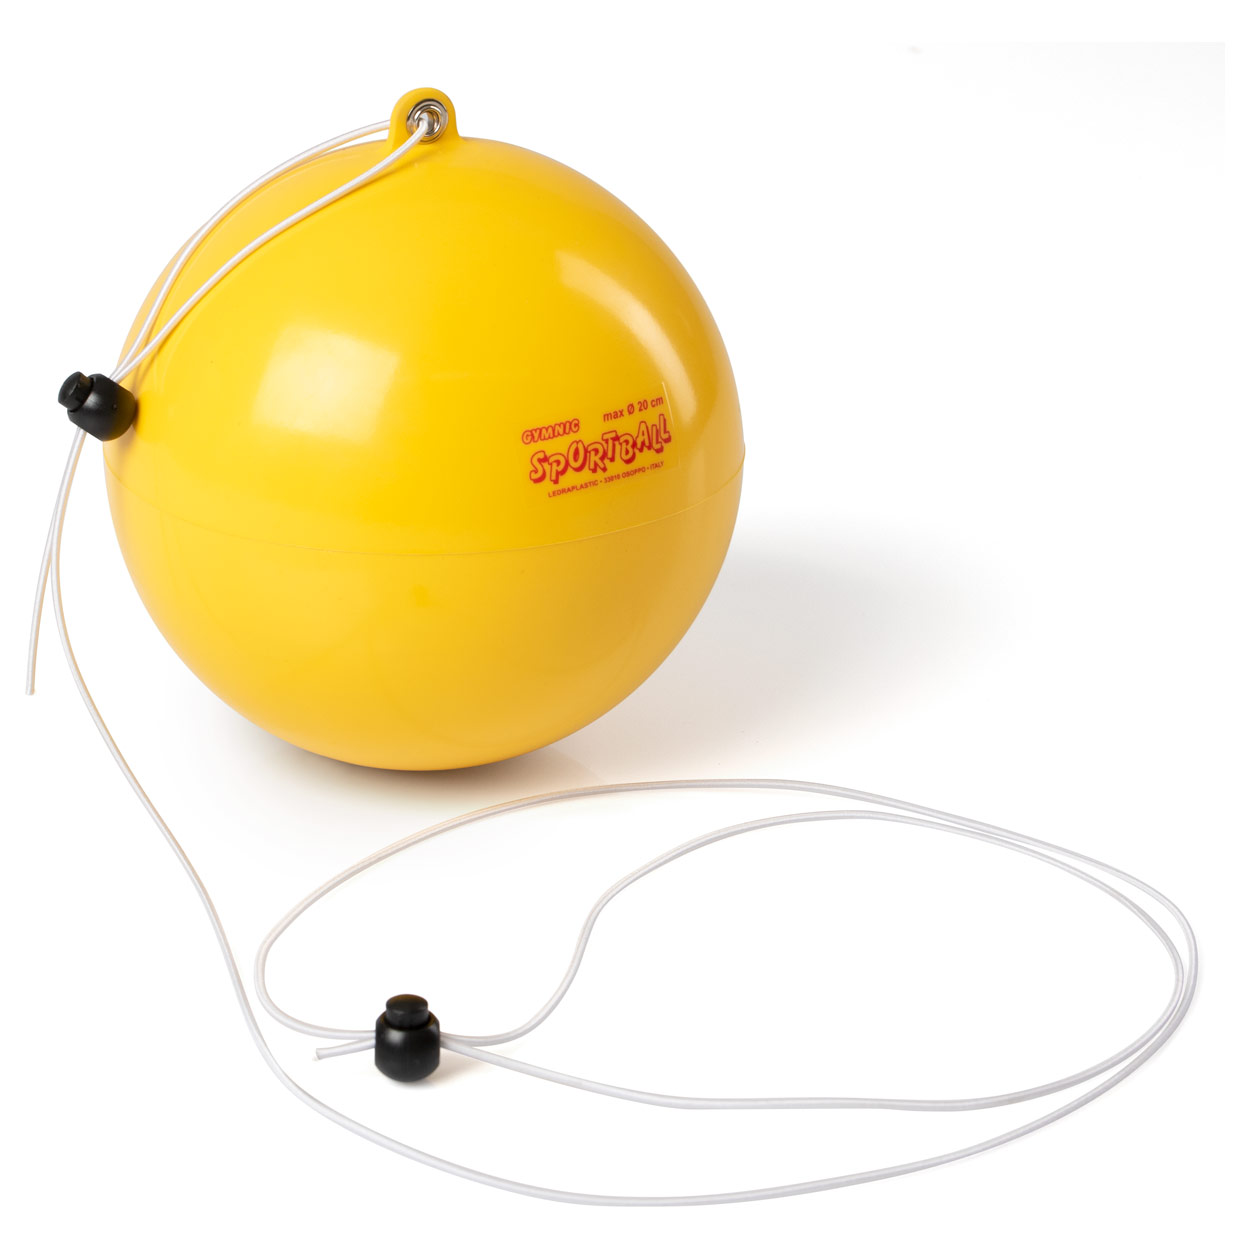 Sportball mit Schnur Spielball Übungsball Gymnastikball Fitnesstrainer 18-21 cm